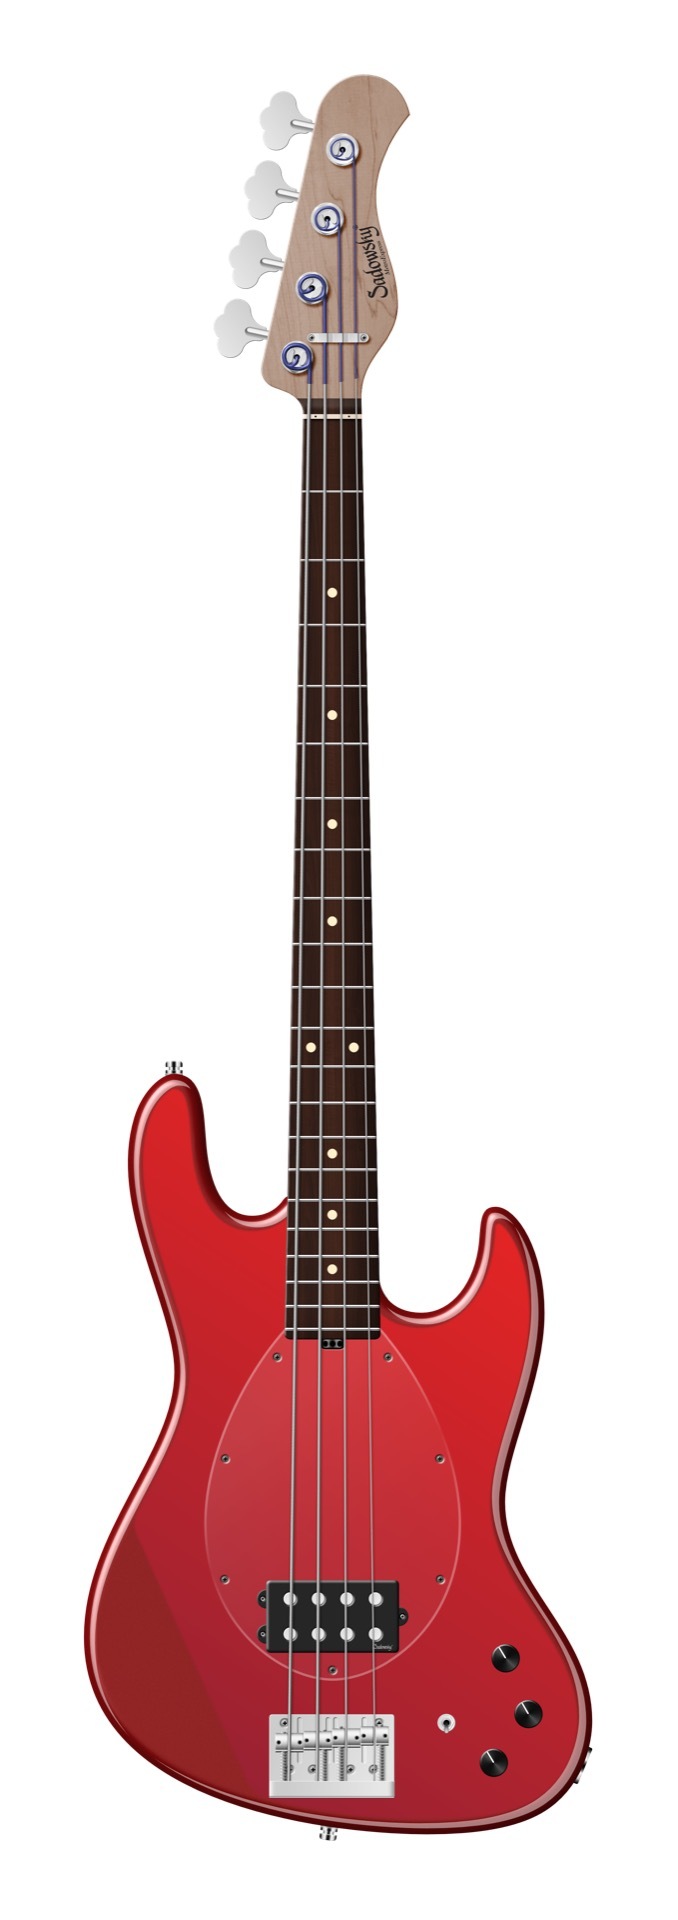 Sadowsky MetroExpress 21-Fret Vintage M Bass, Morado Fingerboard, 4-String - Solid Candy Apple Red Metallic High Polish